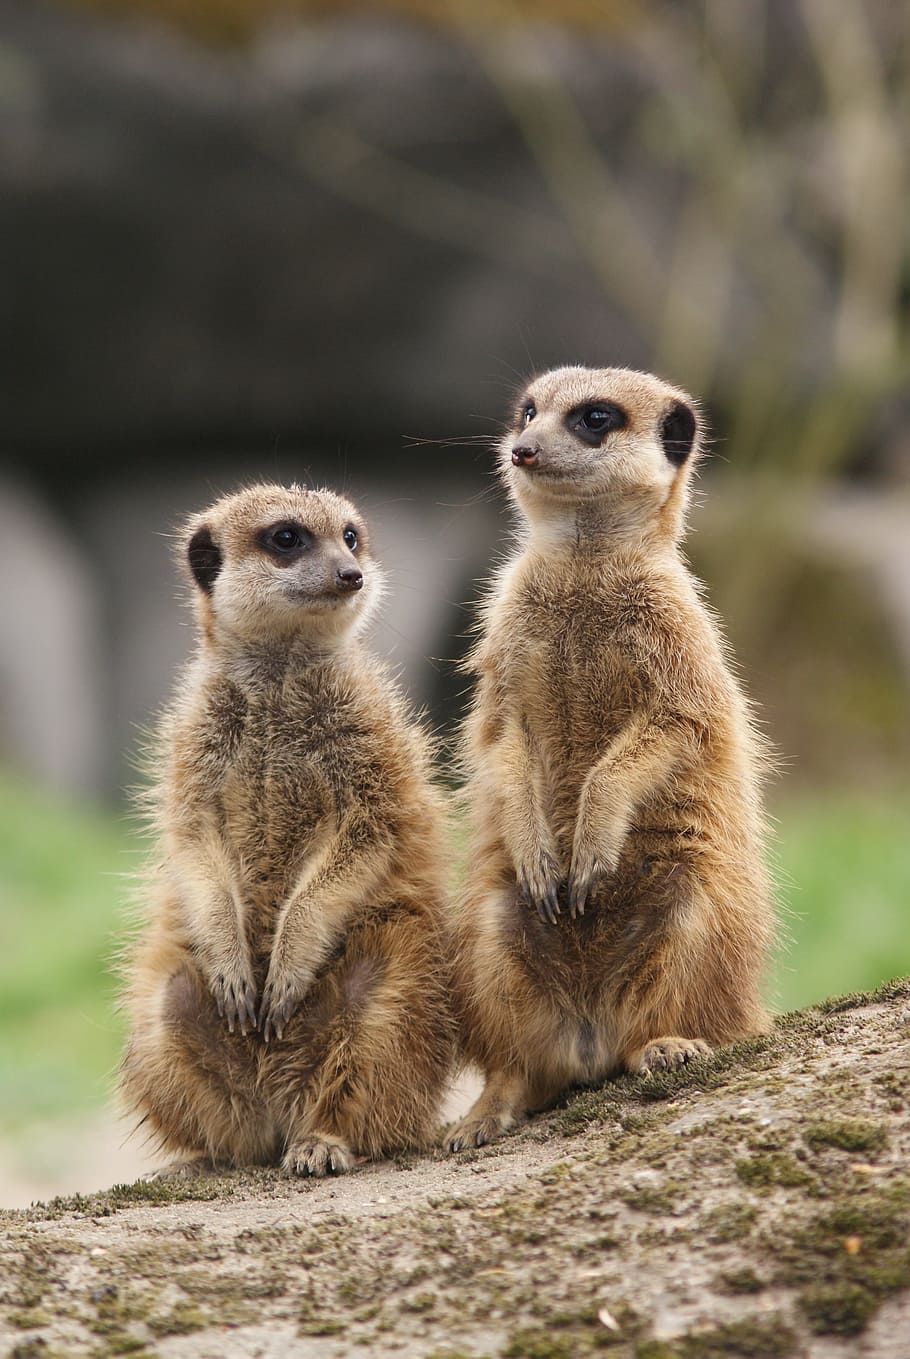 HD wallpaper: two brown animals on grass, meerkat, together, meeting, alert  | Wallpaper Flare